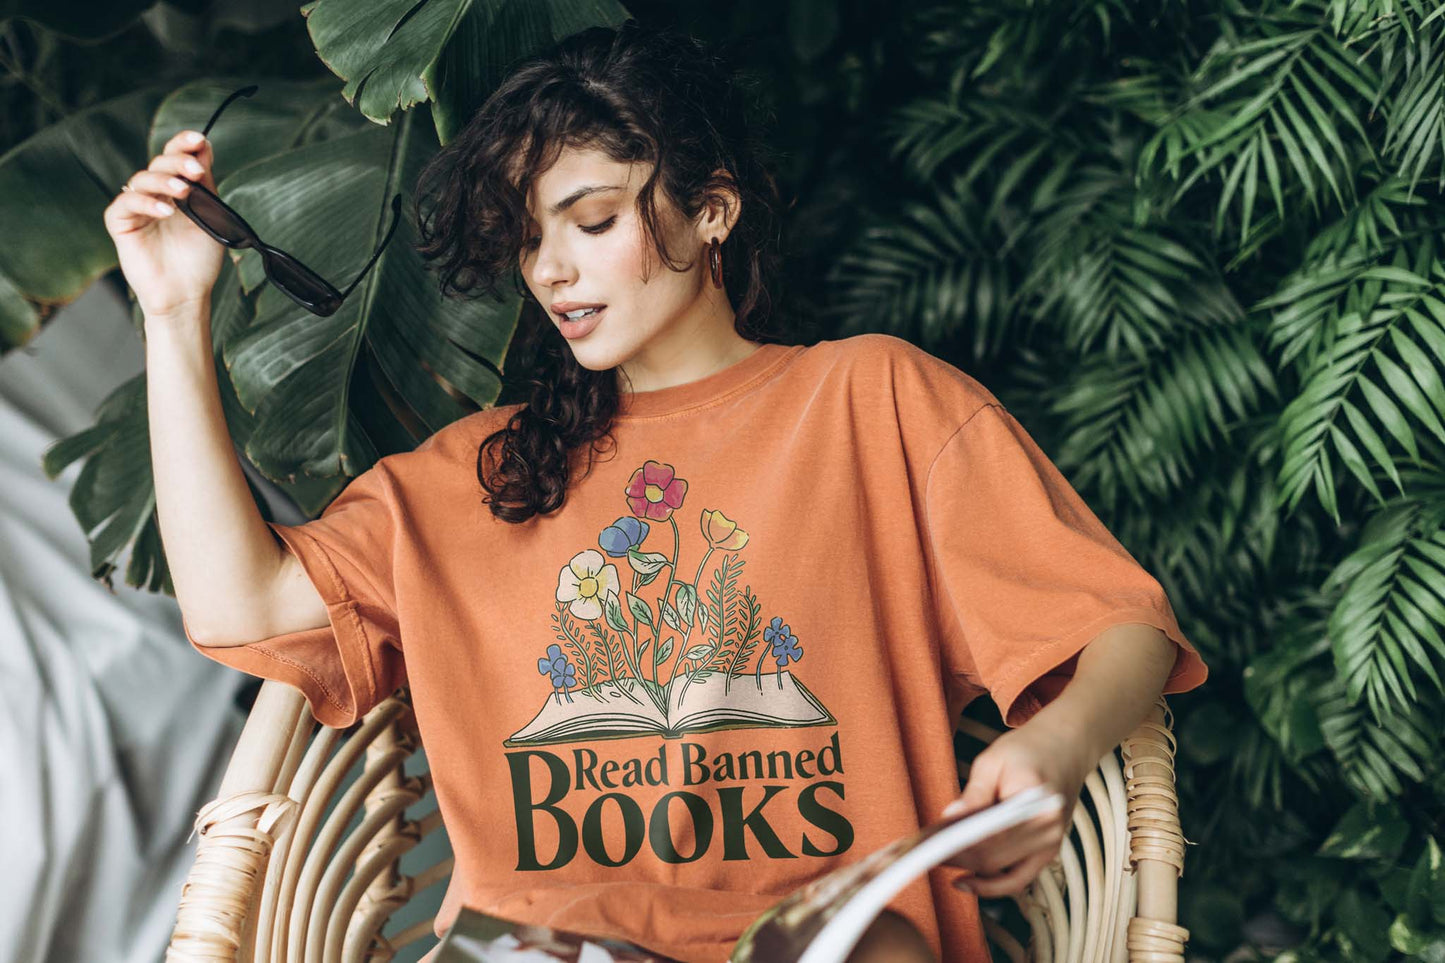 Read Banned Books Shirt, Reading Shirt, First Amendment Rights Shirt, Librarian Gift, Book Lover Shirt